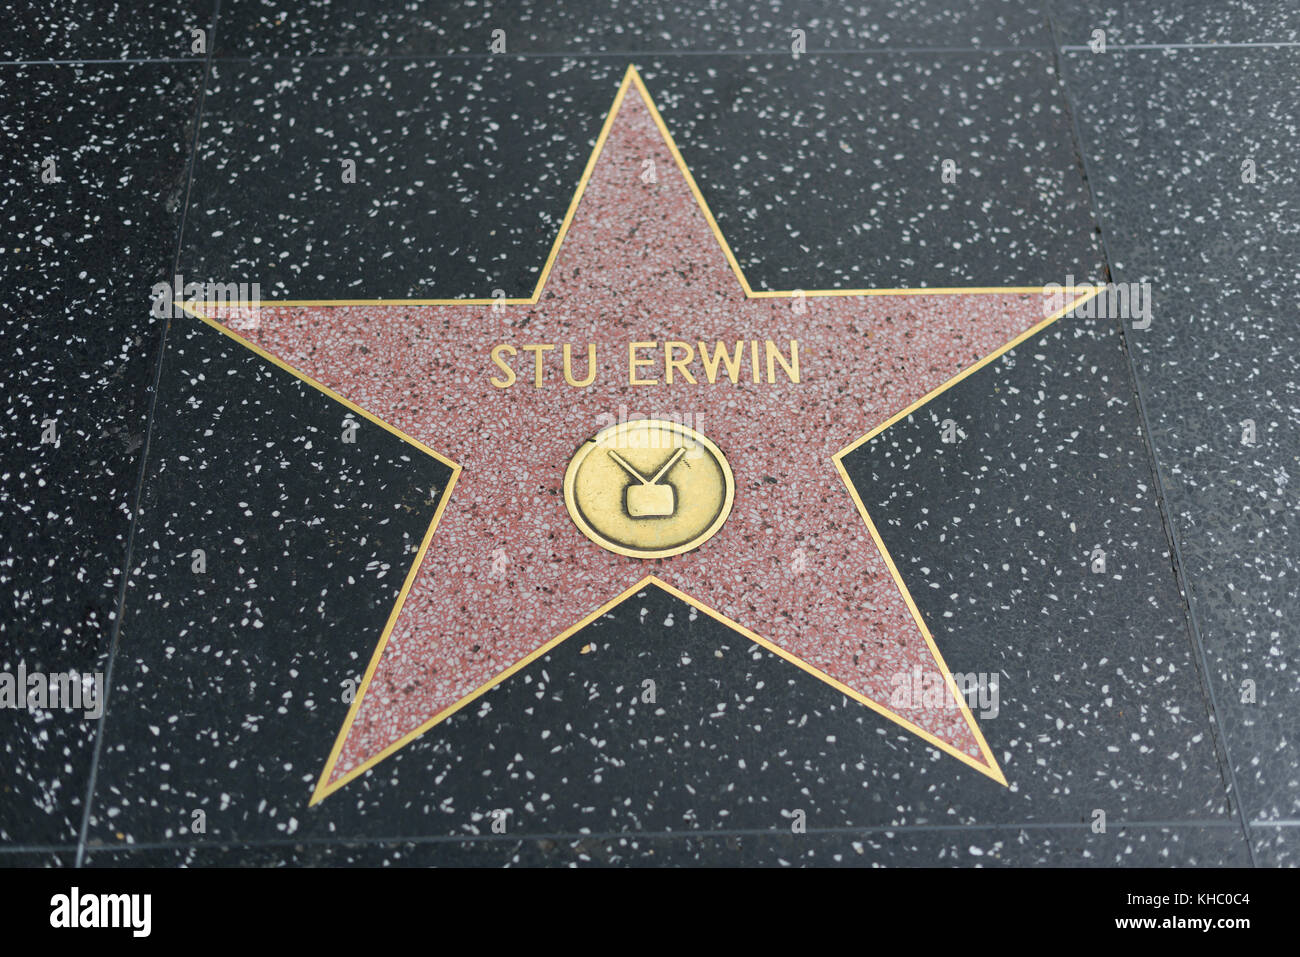 HOLLYWOOD, CA - DEZEMBER 06: Stu Erwin Star auf dem Hollywood Walk of Fame in Hollywood, Kalifornien am 6. Dezember 2016. Stockfoto